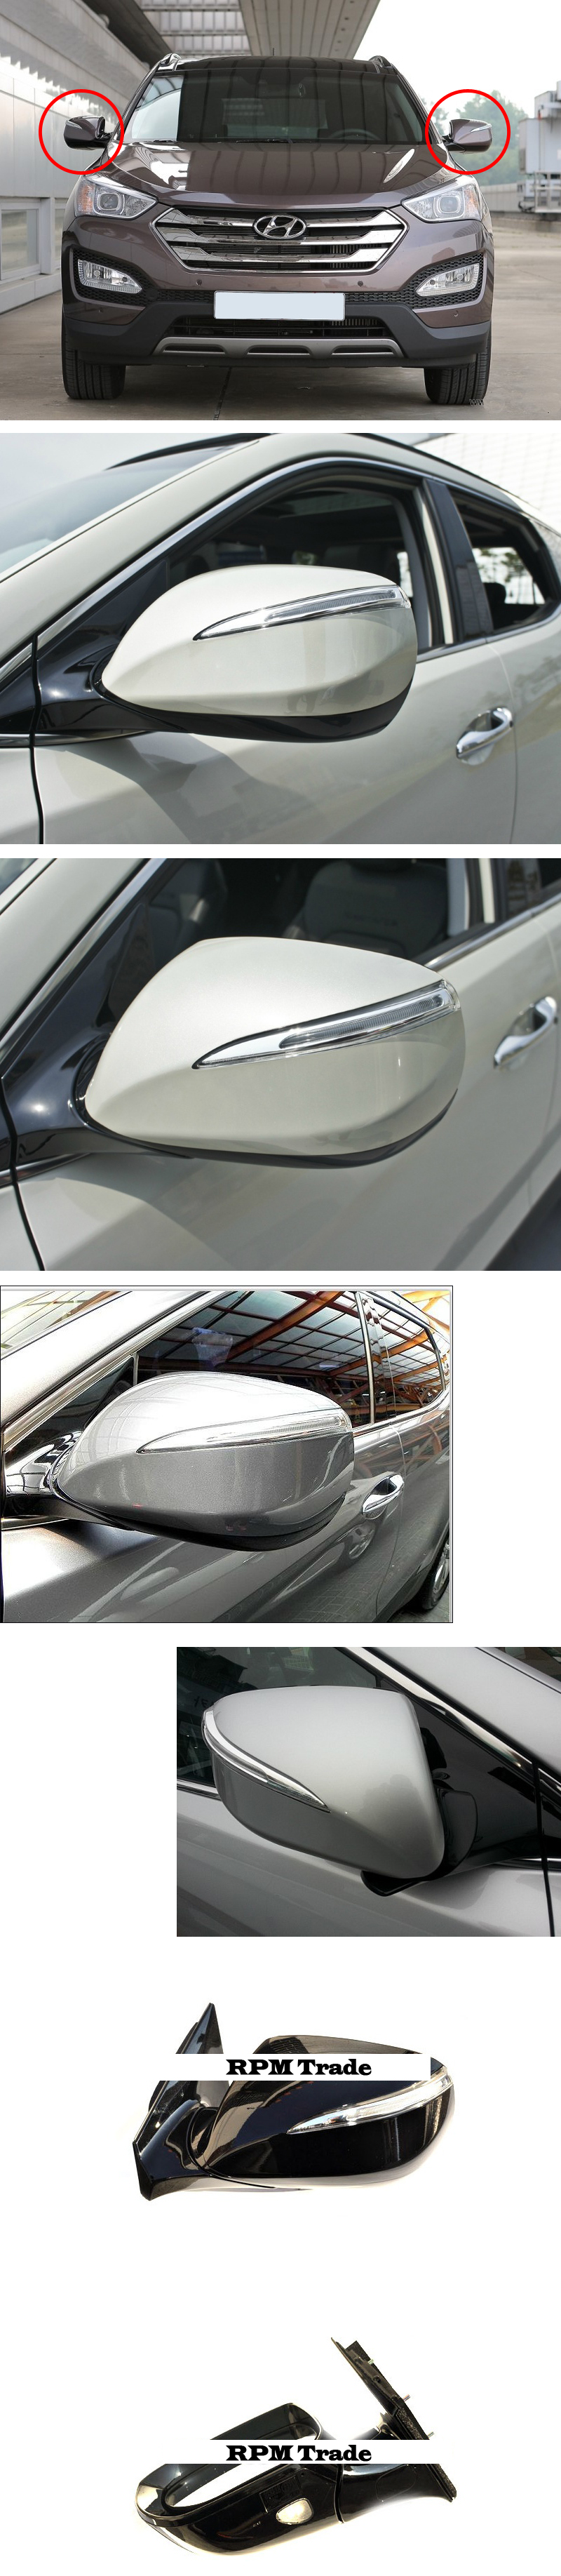 LH, RH LED Auto Folding Side Mirror Genuine For 13~2015+ Hyundai Santa Fe Sport | eBay 2015 Hyundai Santa Fe Side Mirror Replacement